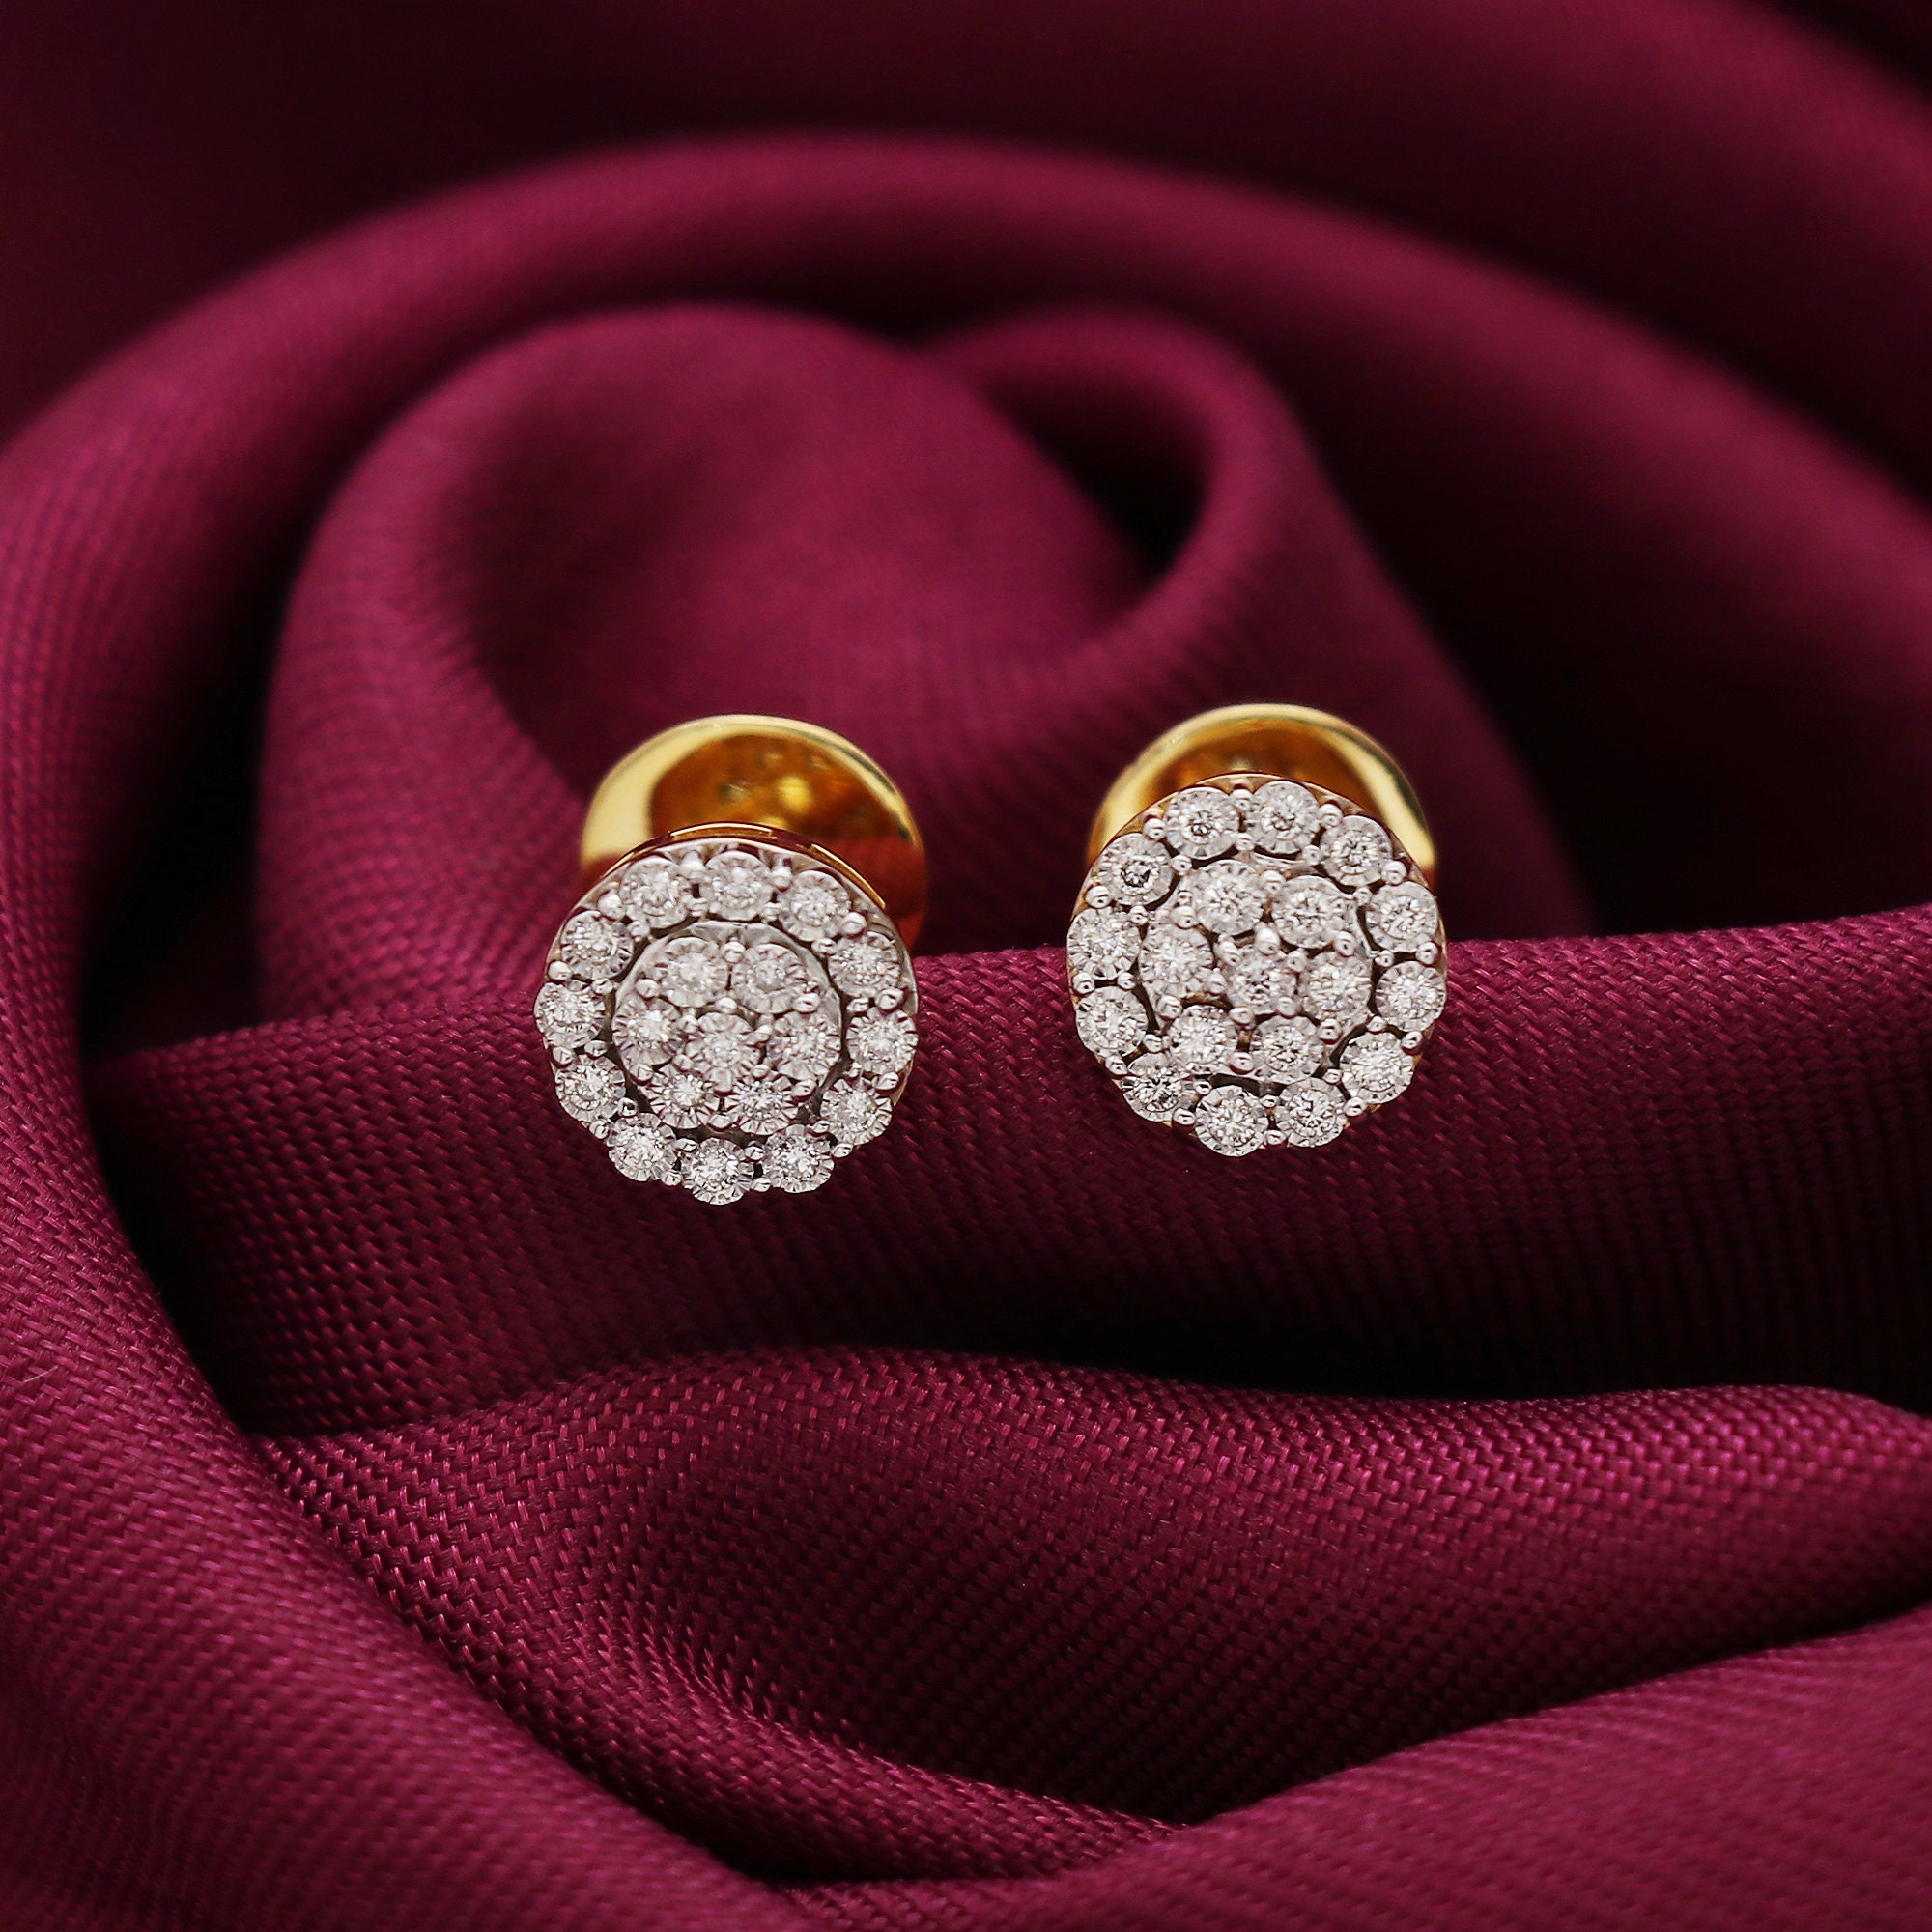 Buy Diamond Stud Earrings For Men Online at best price - Candere by Kalyan  Jewellers.